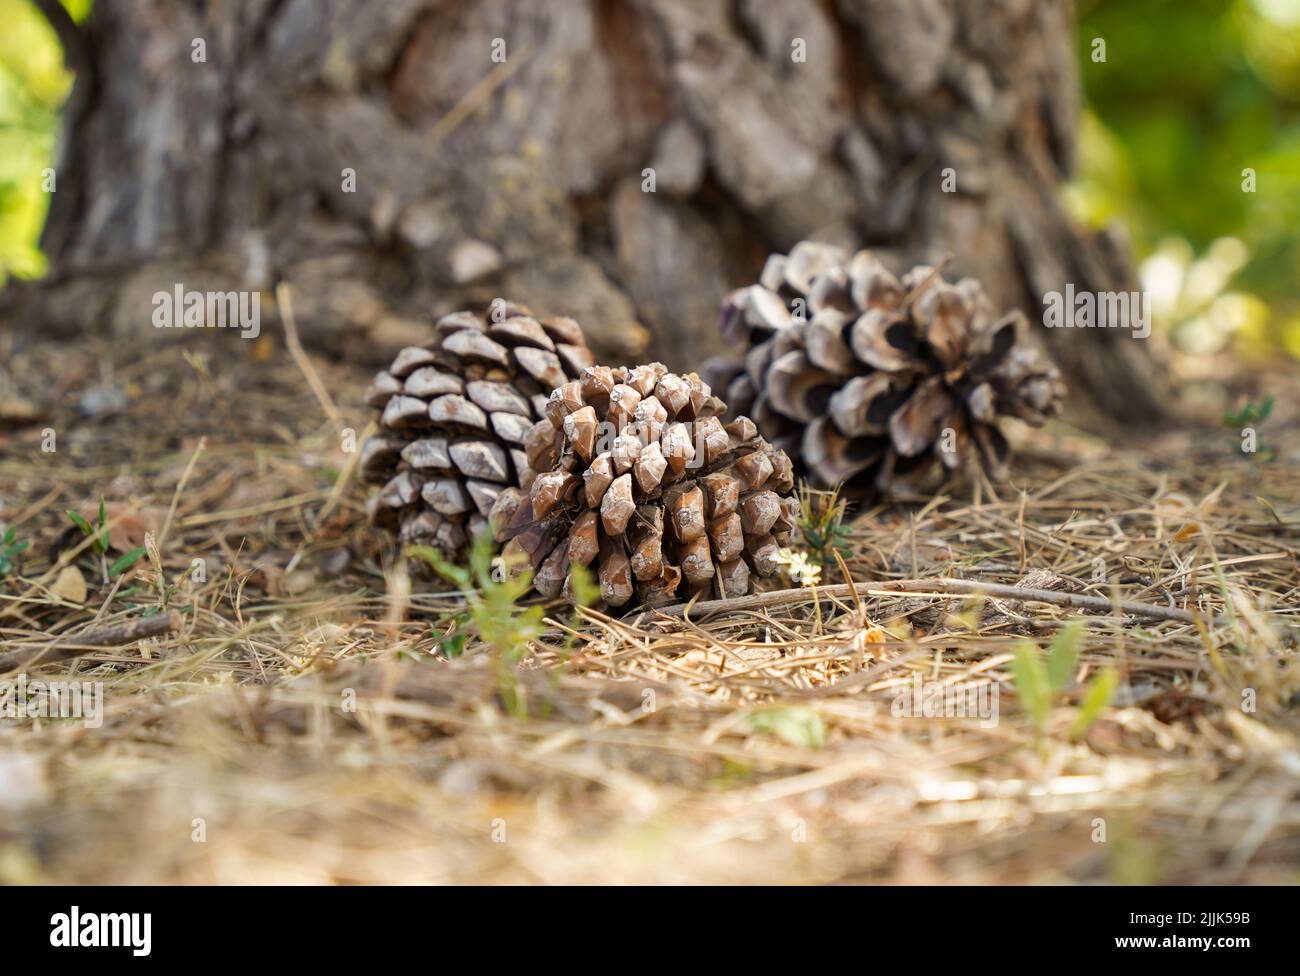 Conos de pino de piedra, Pinus pinea en suelo forestal, España. Foto de stock